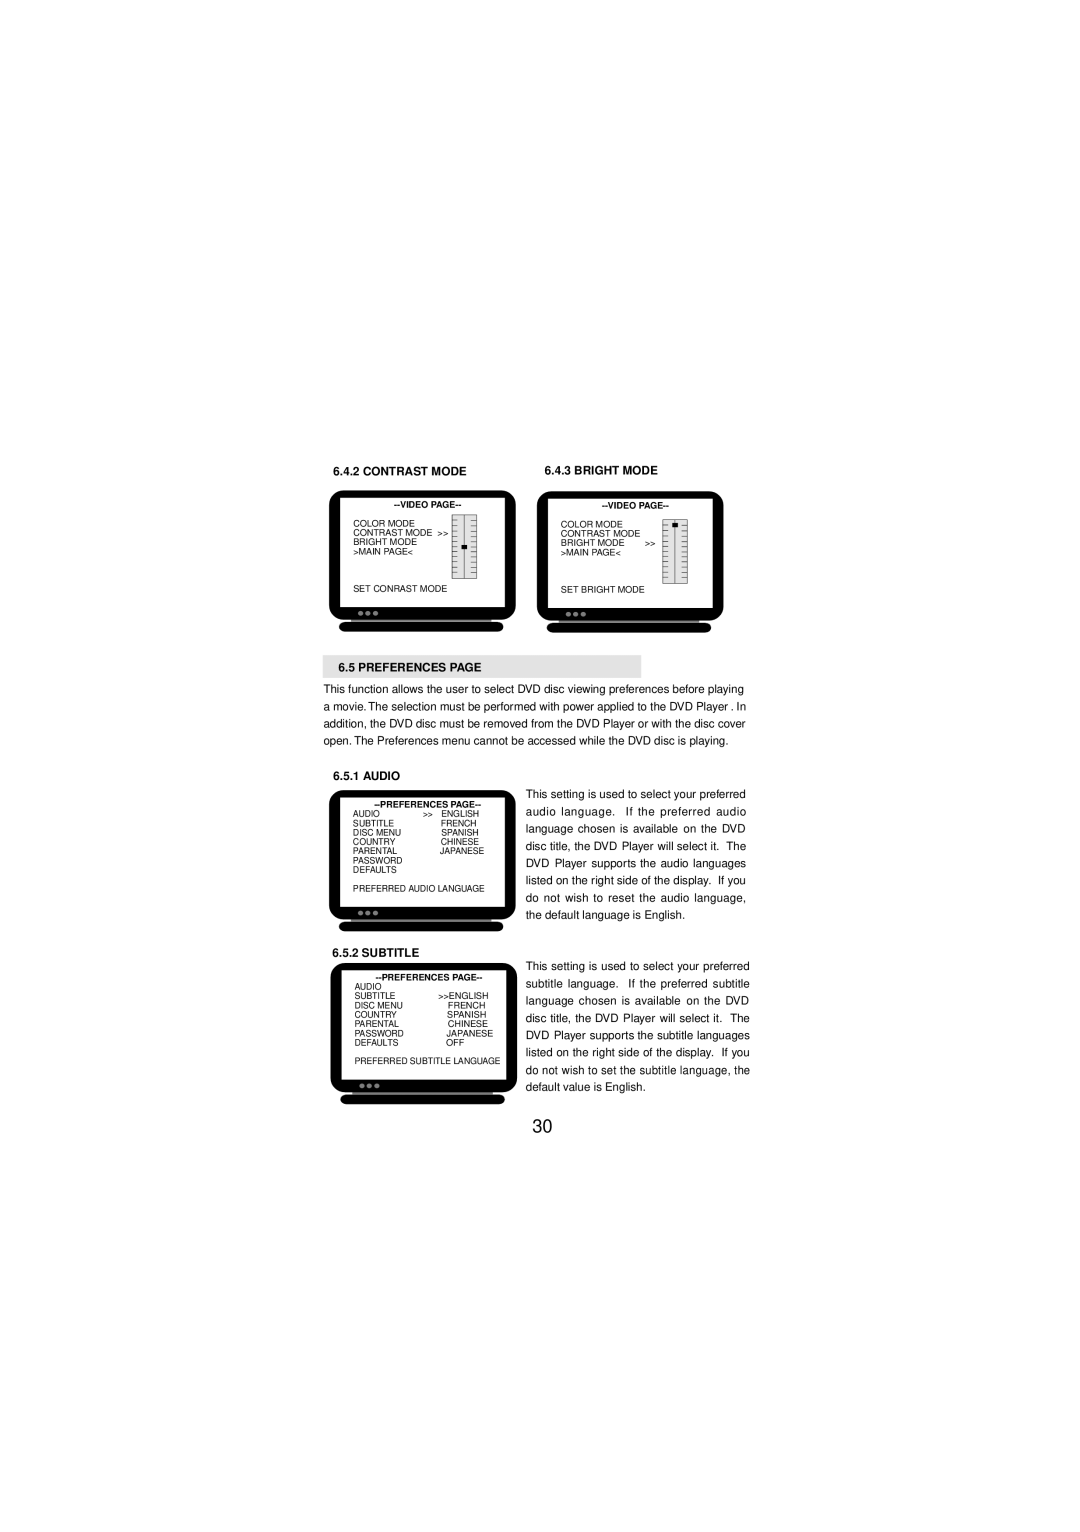 Audiovox DV-1680 manual Contrast Mode, Bright Mode, Preferences Page, Audio, Subtitle 